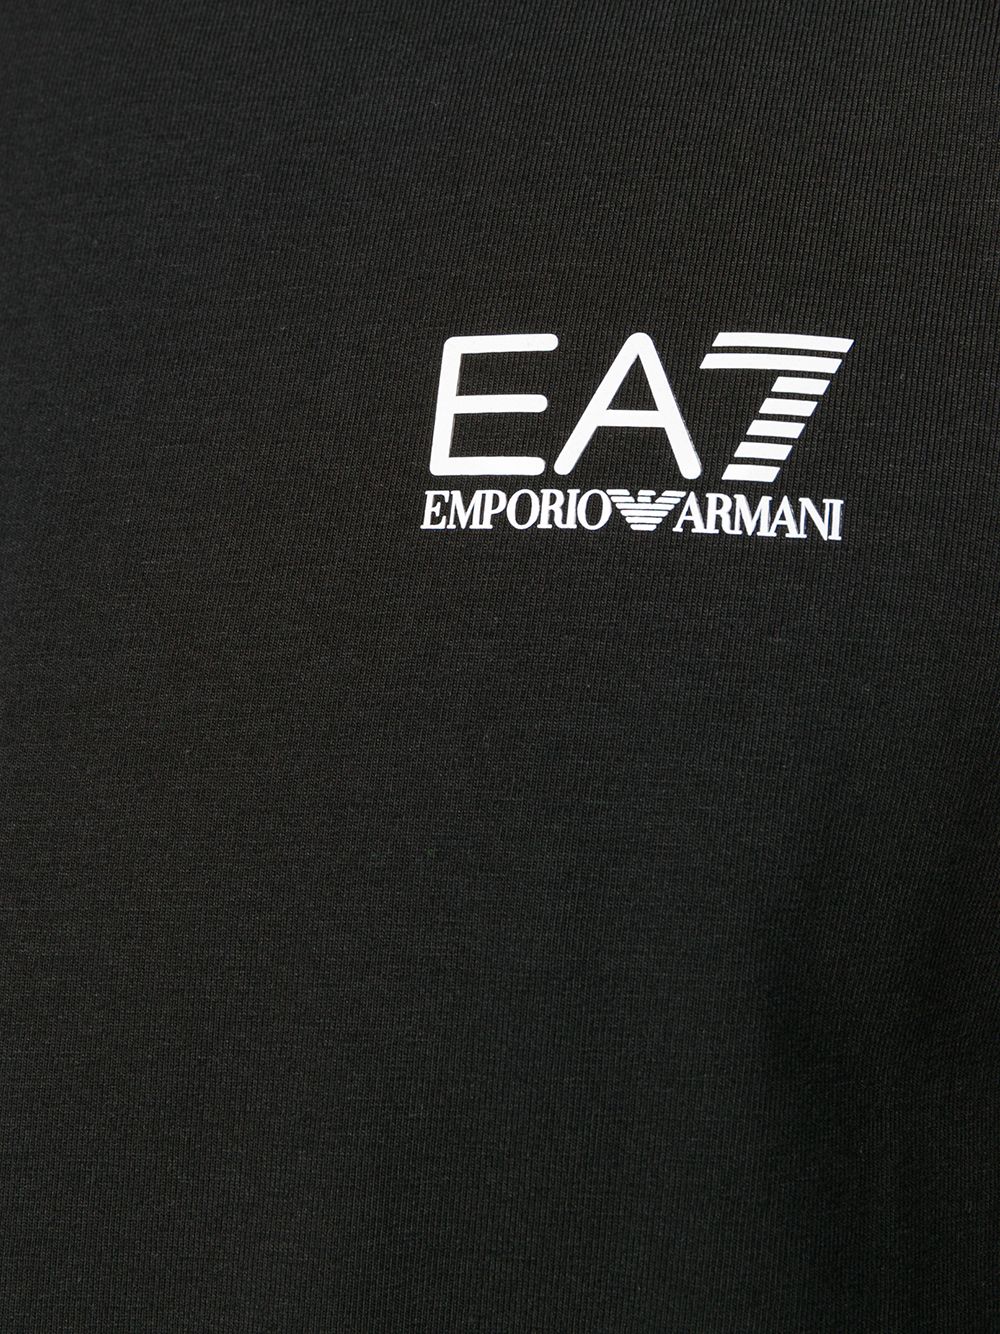 фото Ea7 emporio armani футболка с круглым вырезом и логотипом